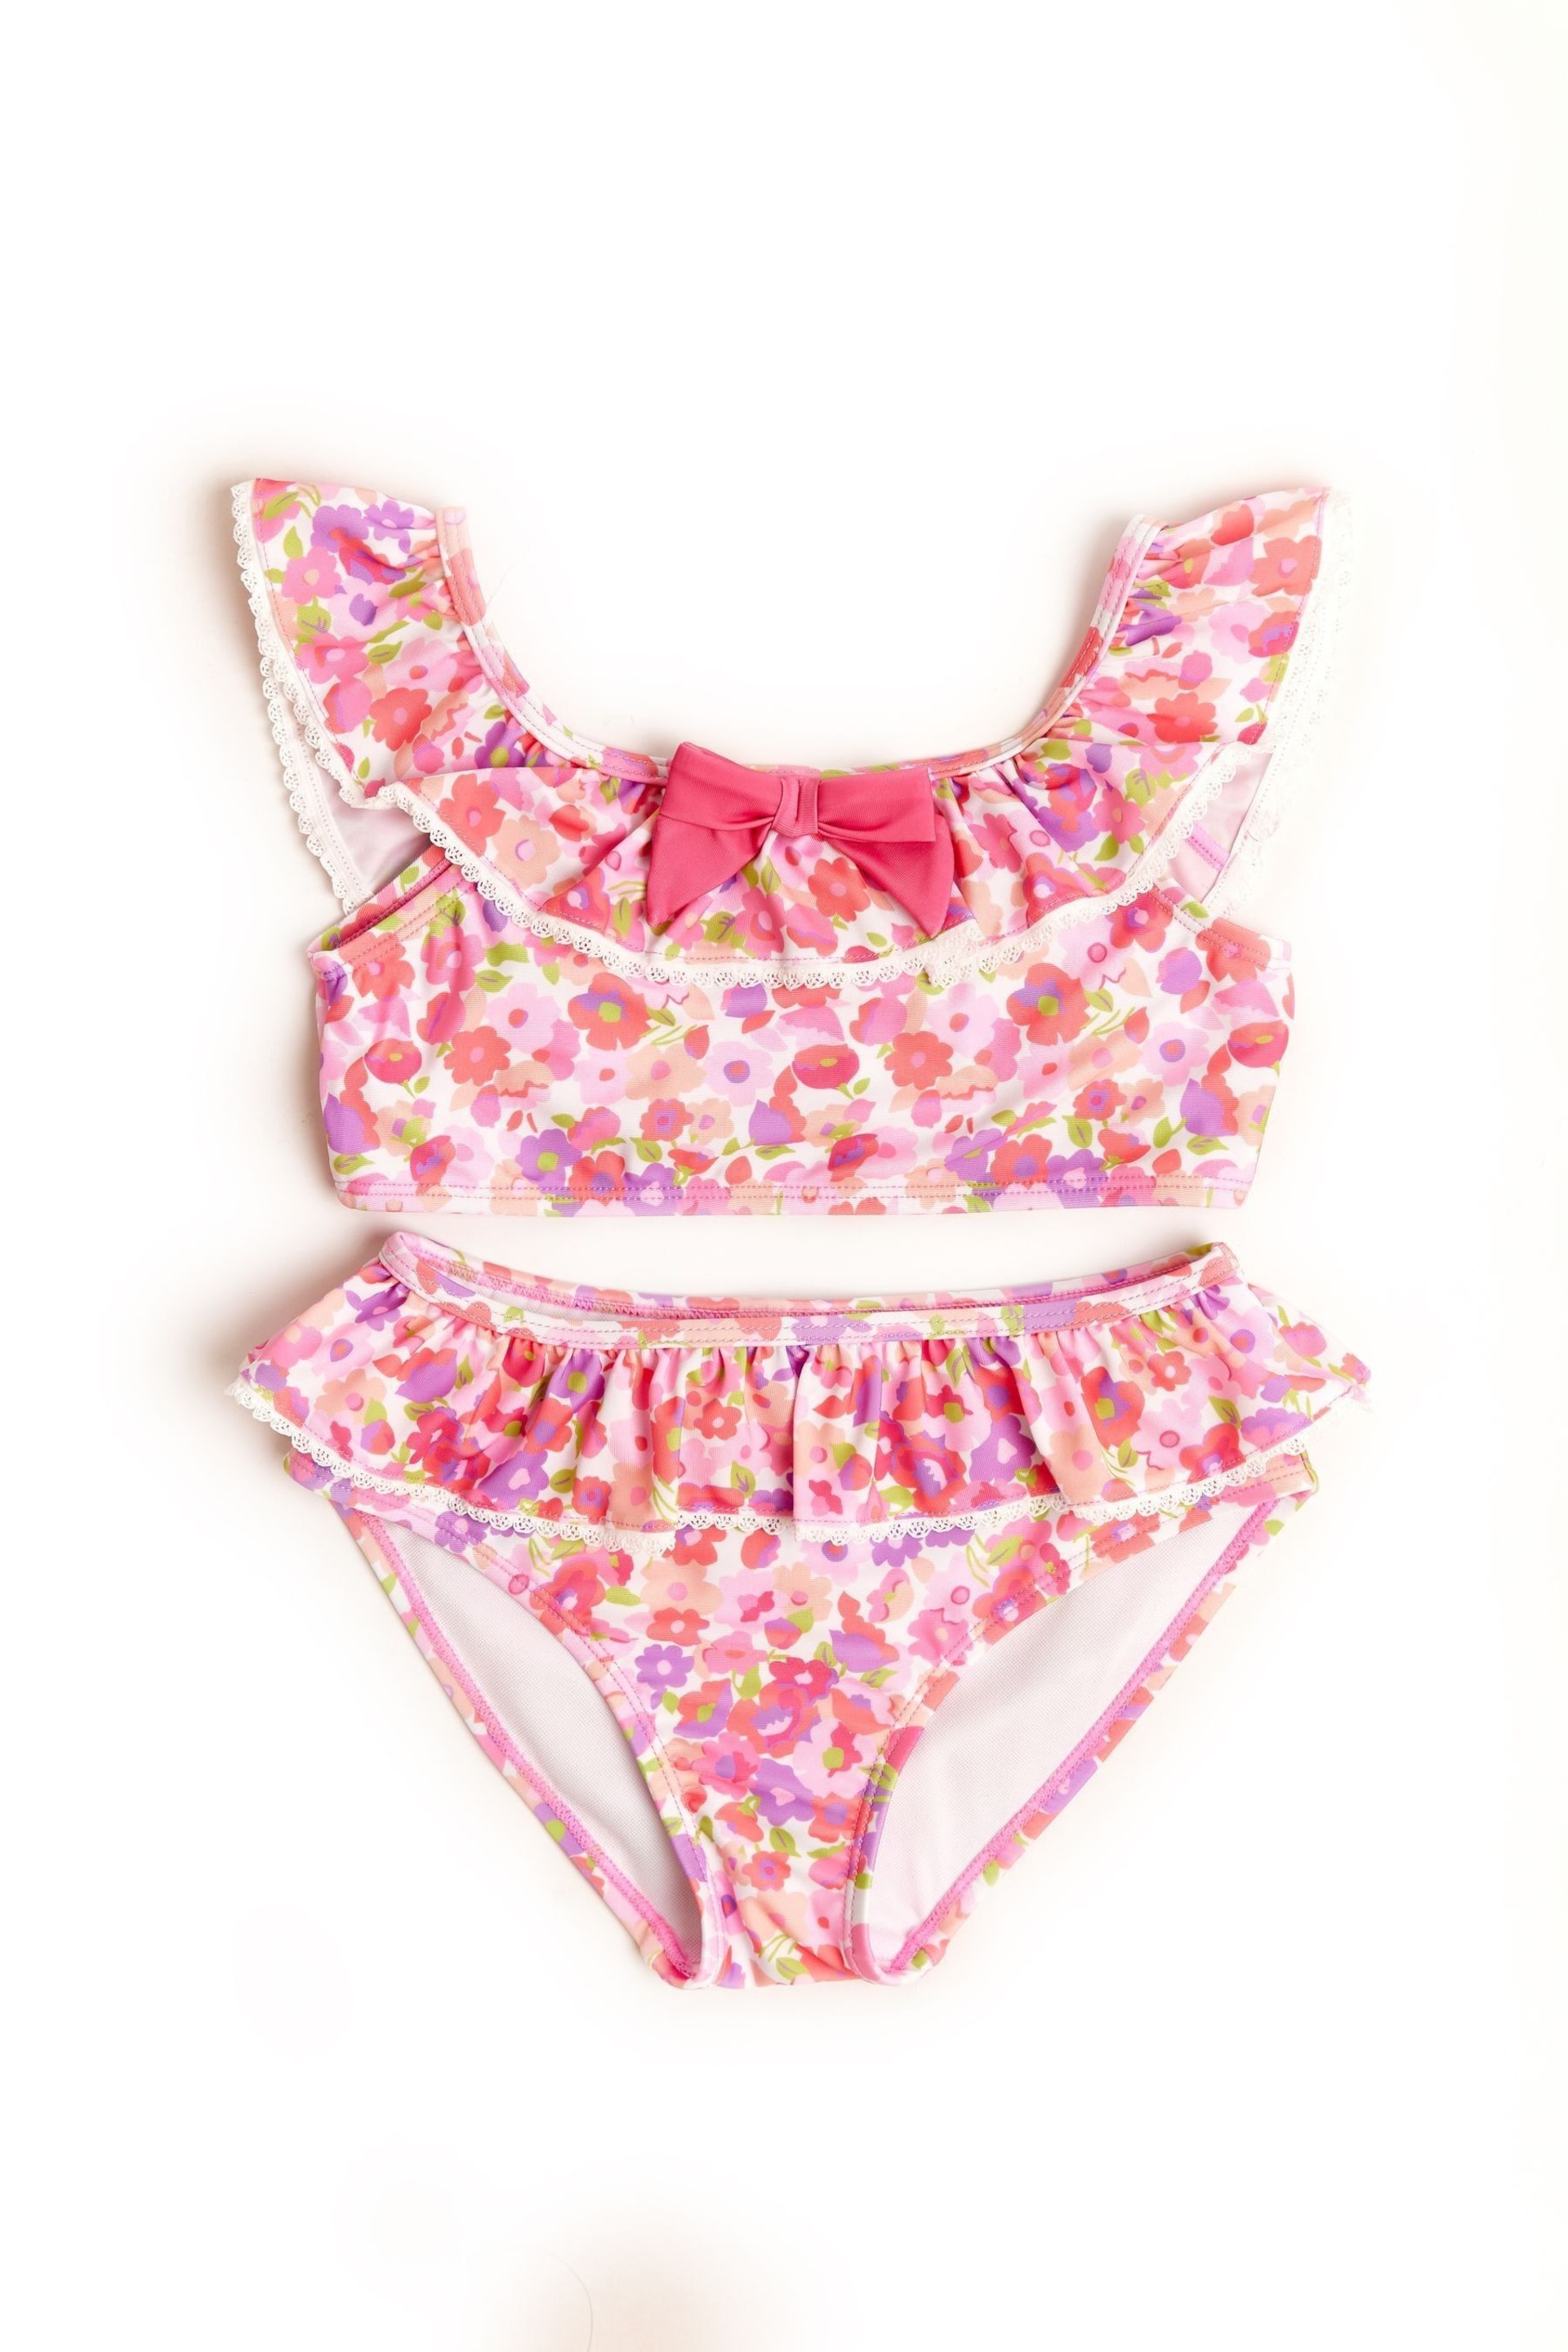 Nicole Miller Pink Floral Bikini Set - Image 1 of 5